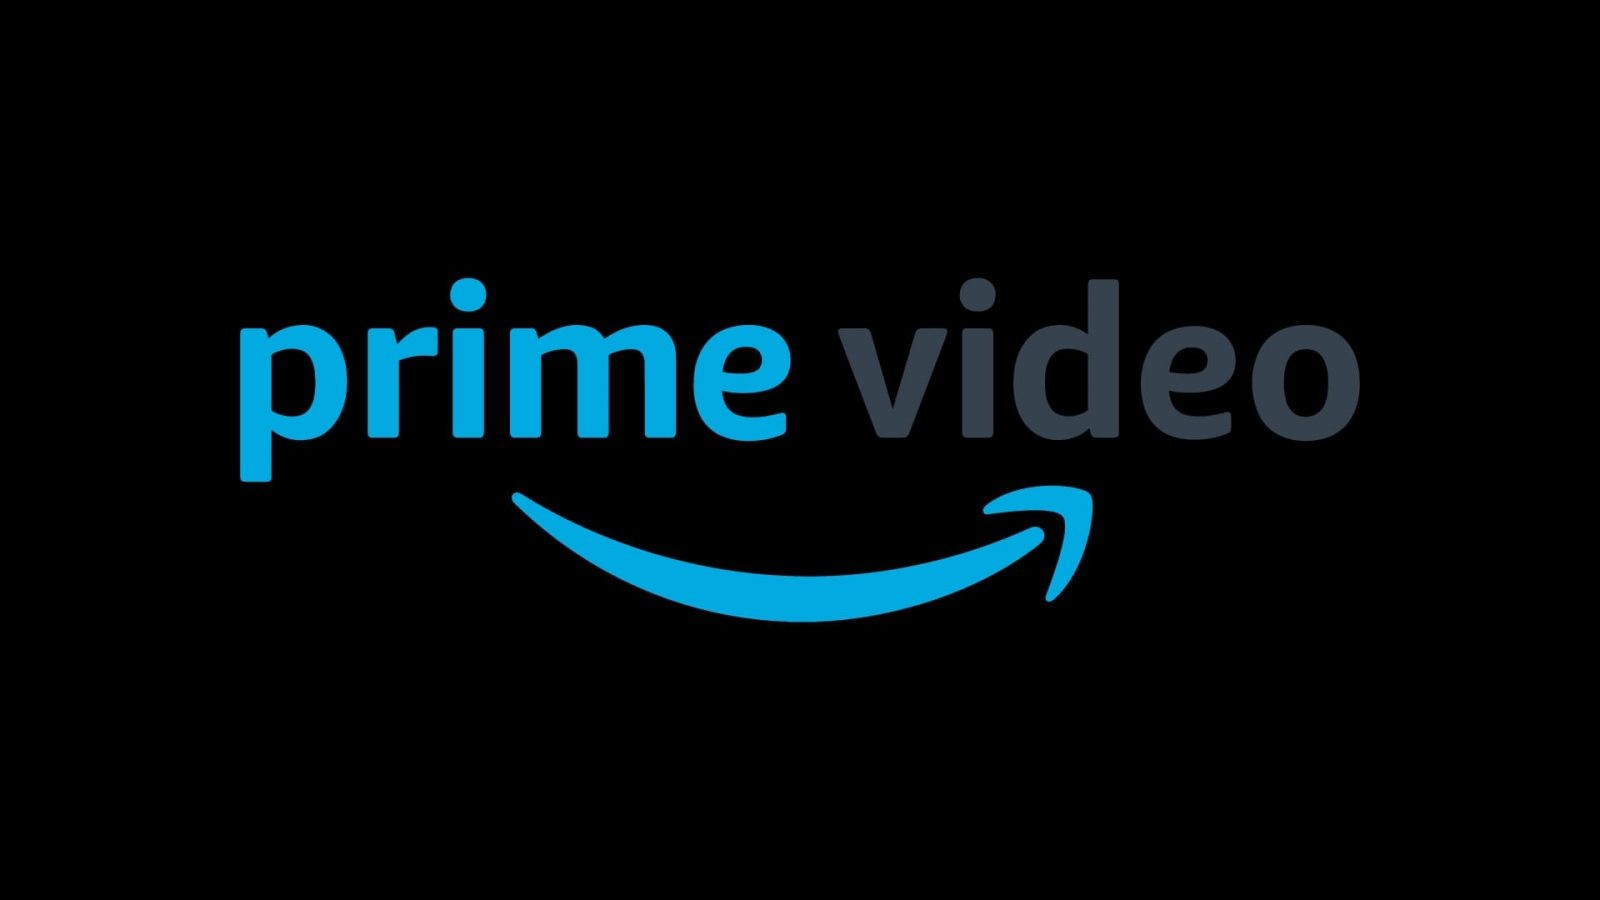 Amazon Prime Video for PC